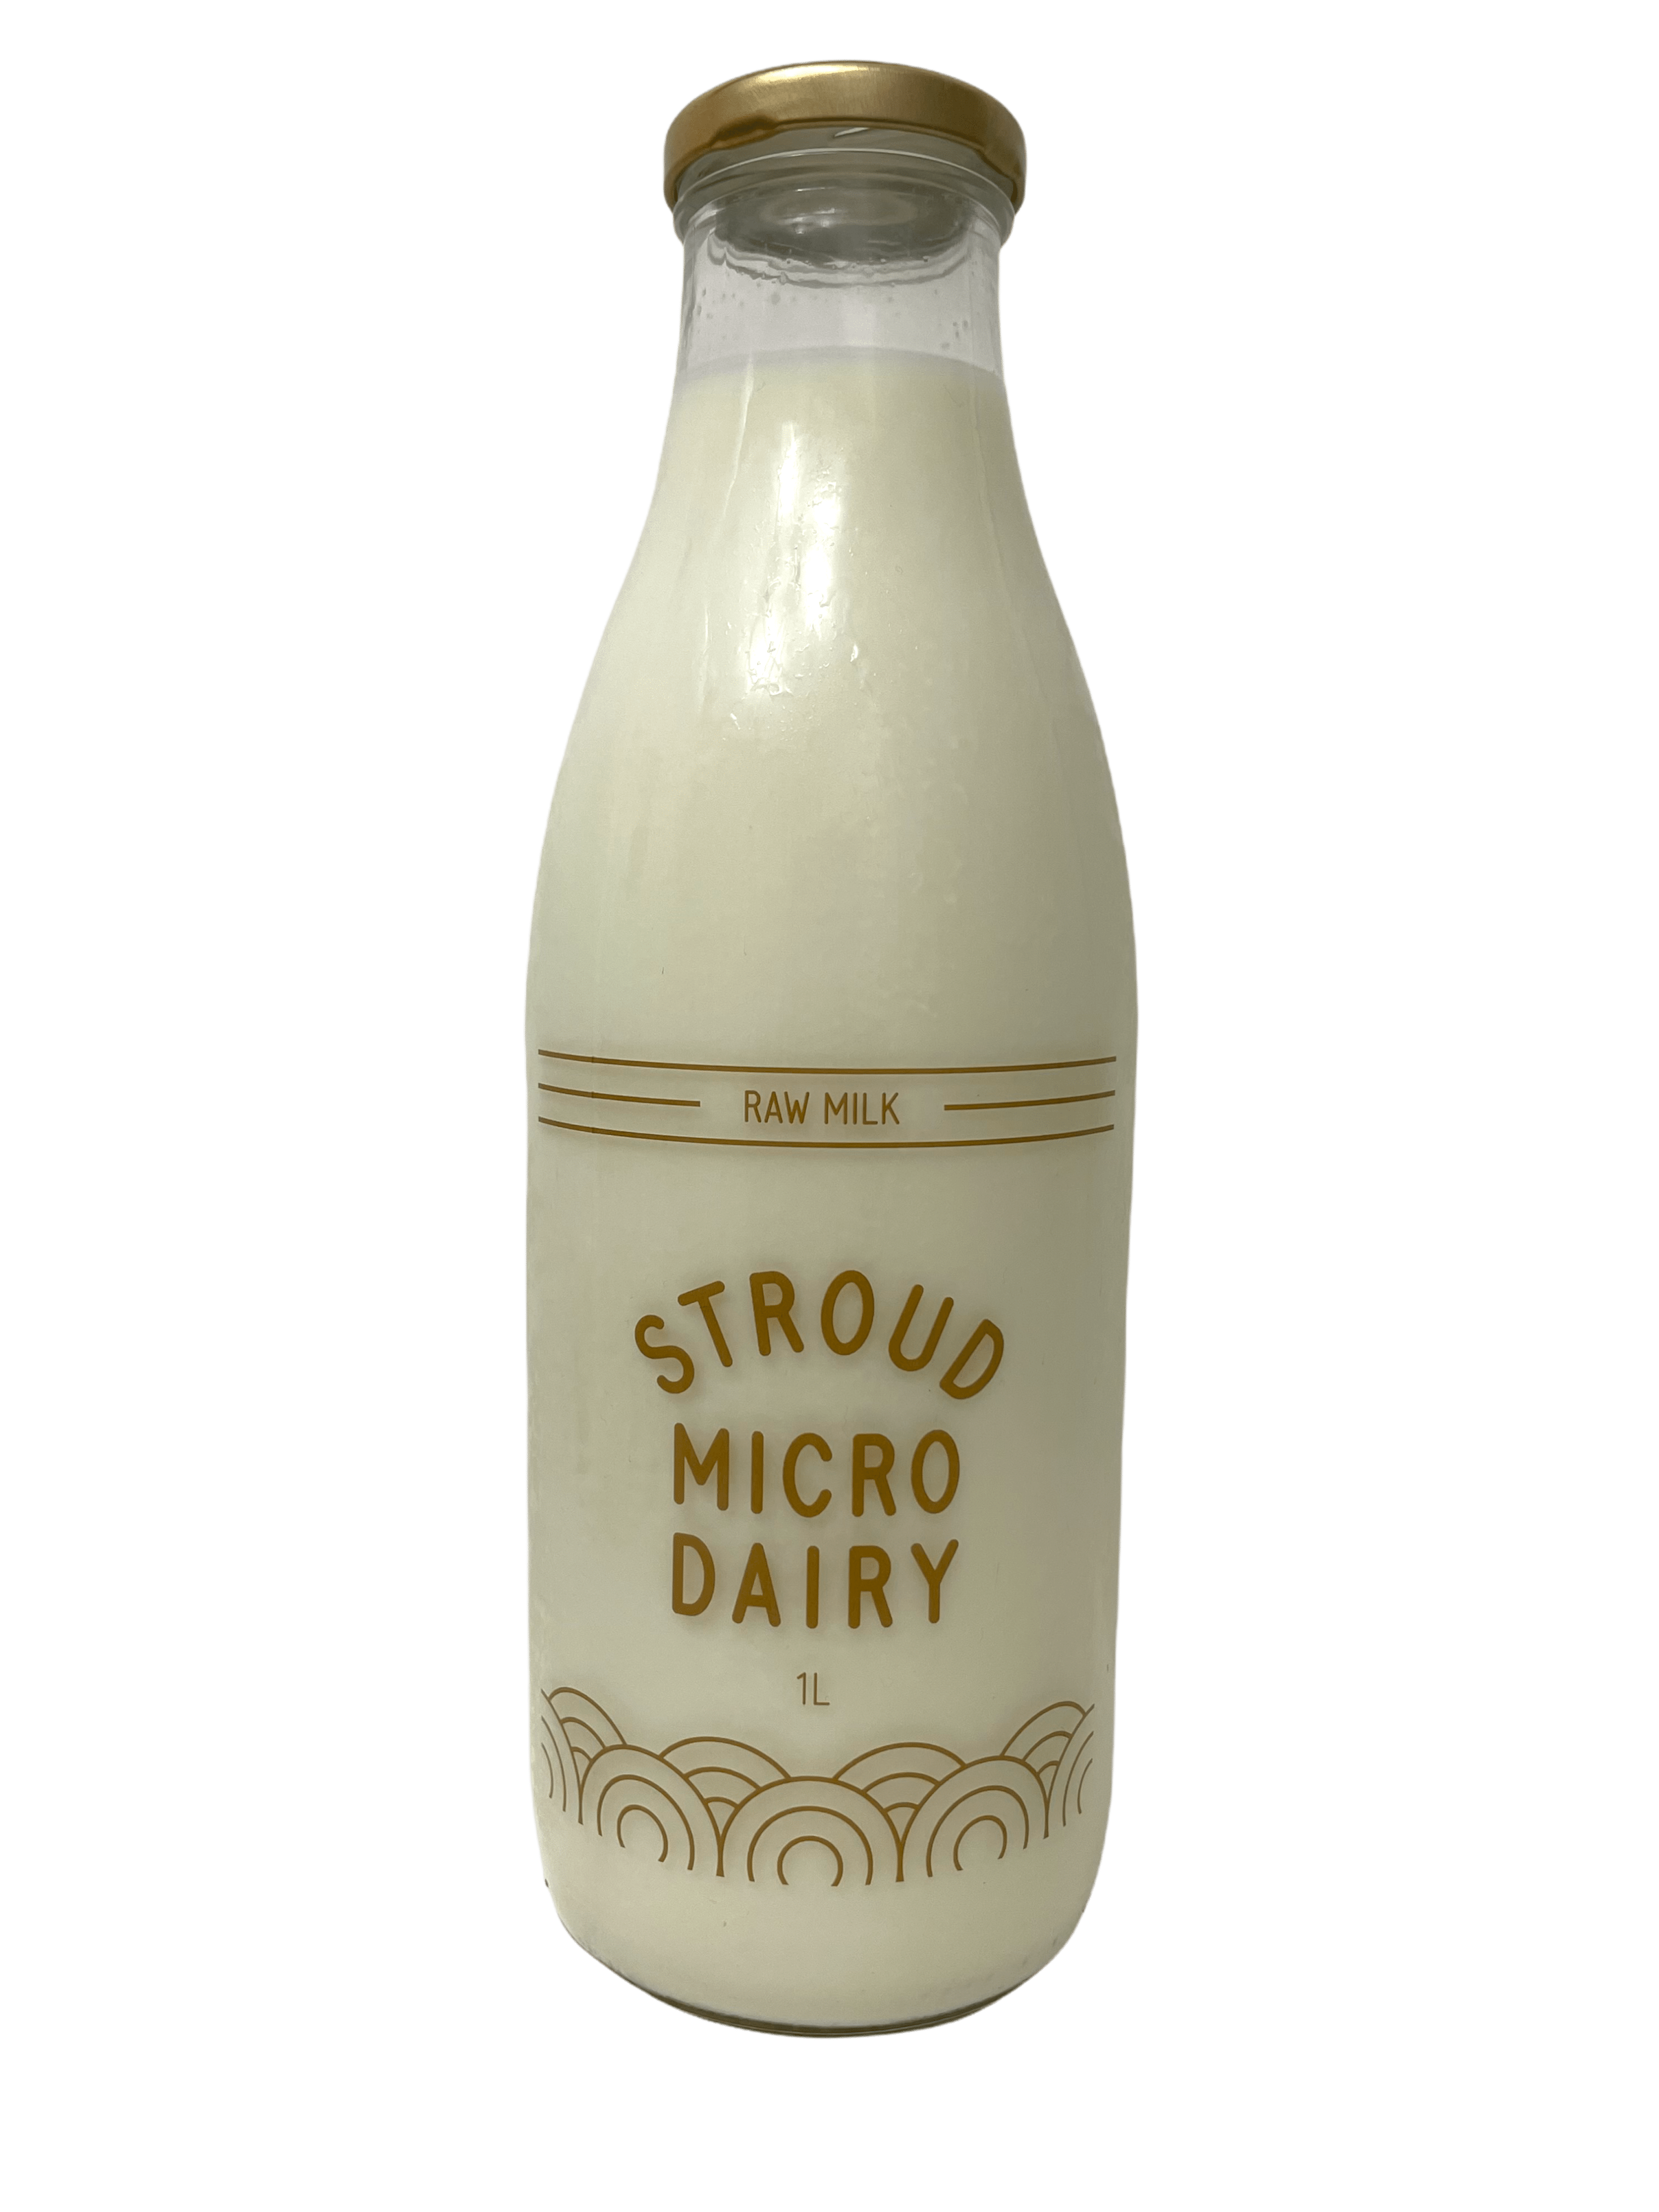 Stroud Micro Dairy - Kelis.info